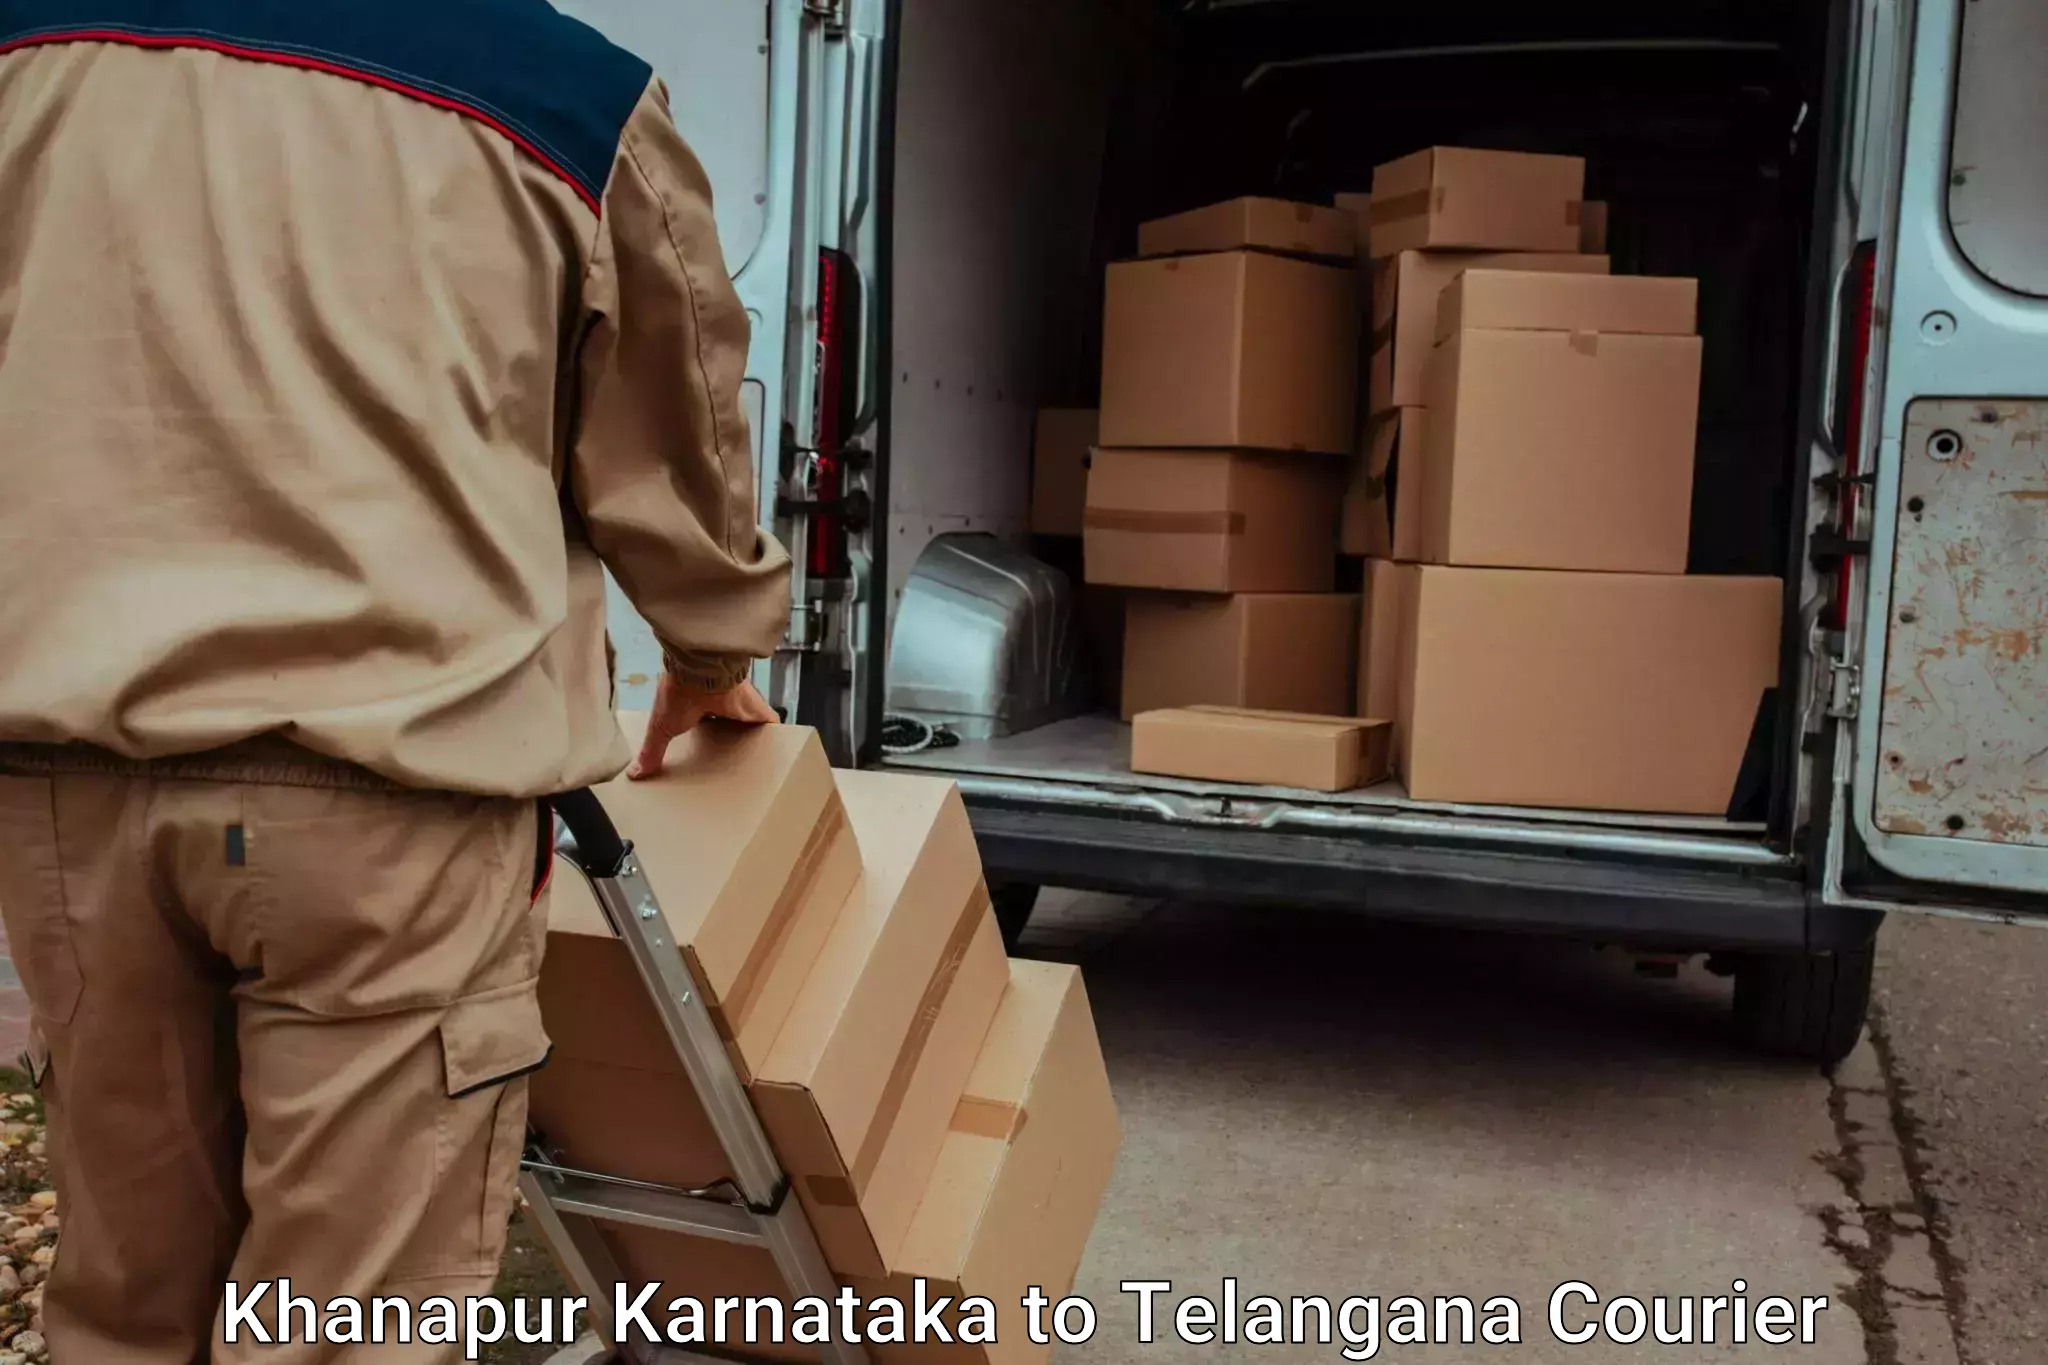 Furniture delivery service Khanapur Karnataka to Tallada